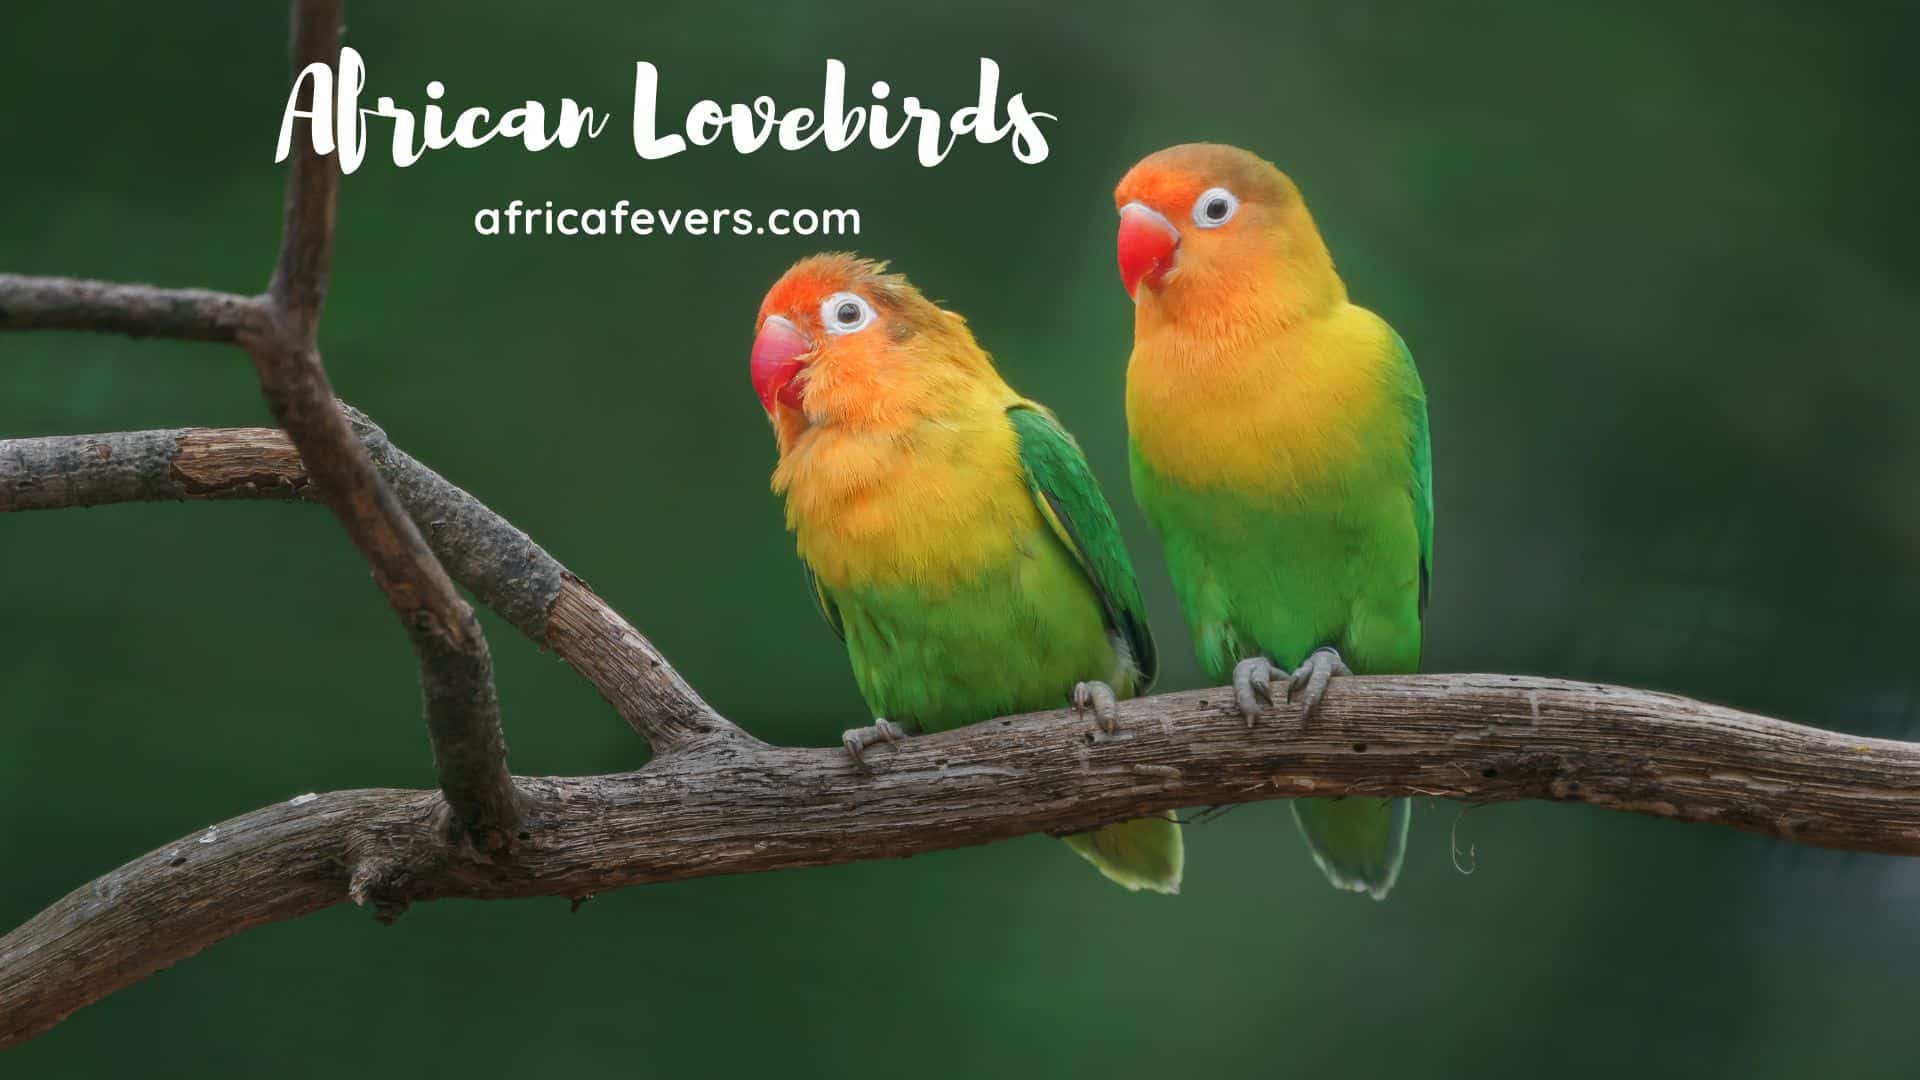 African Lovebirds